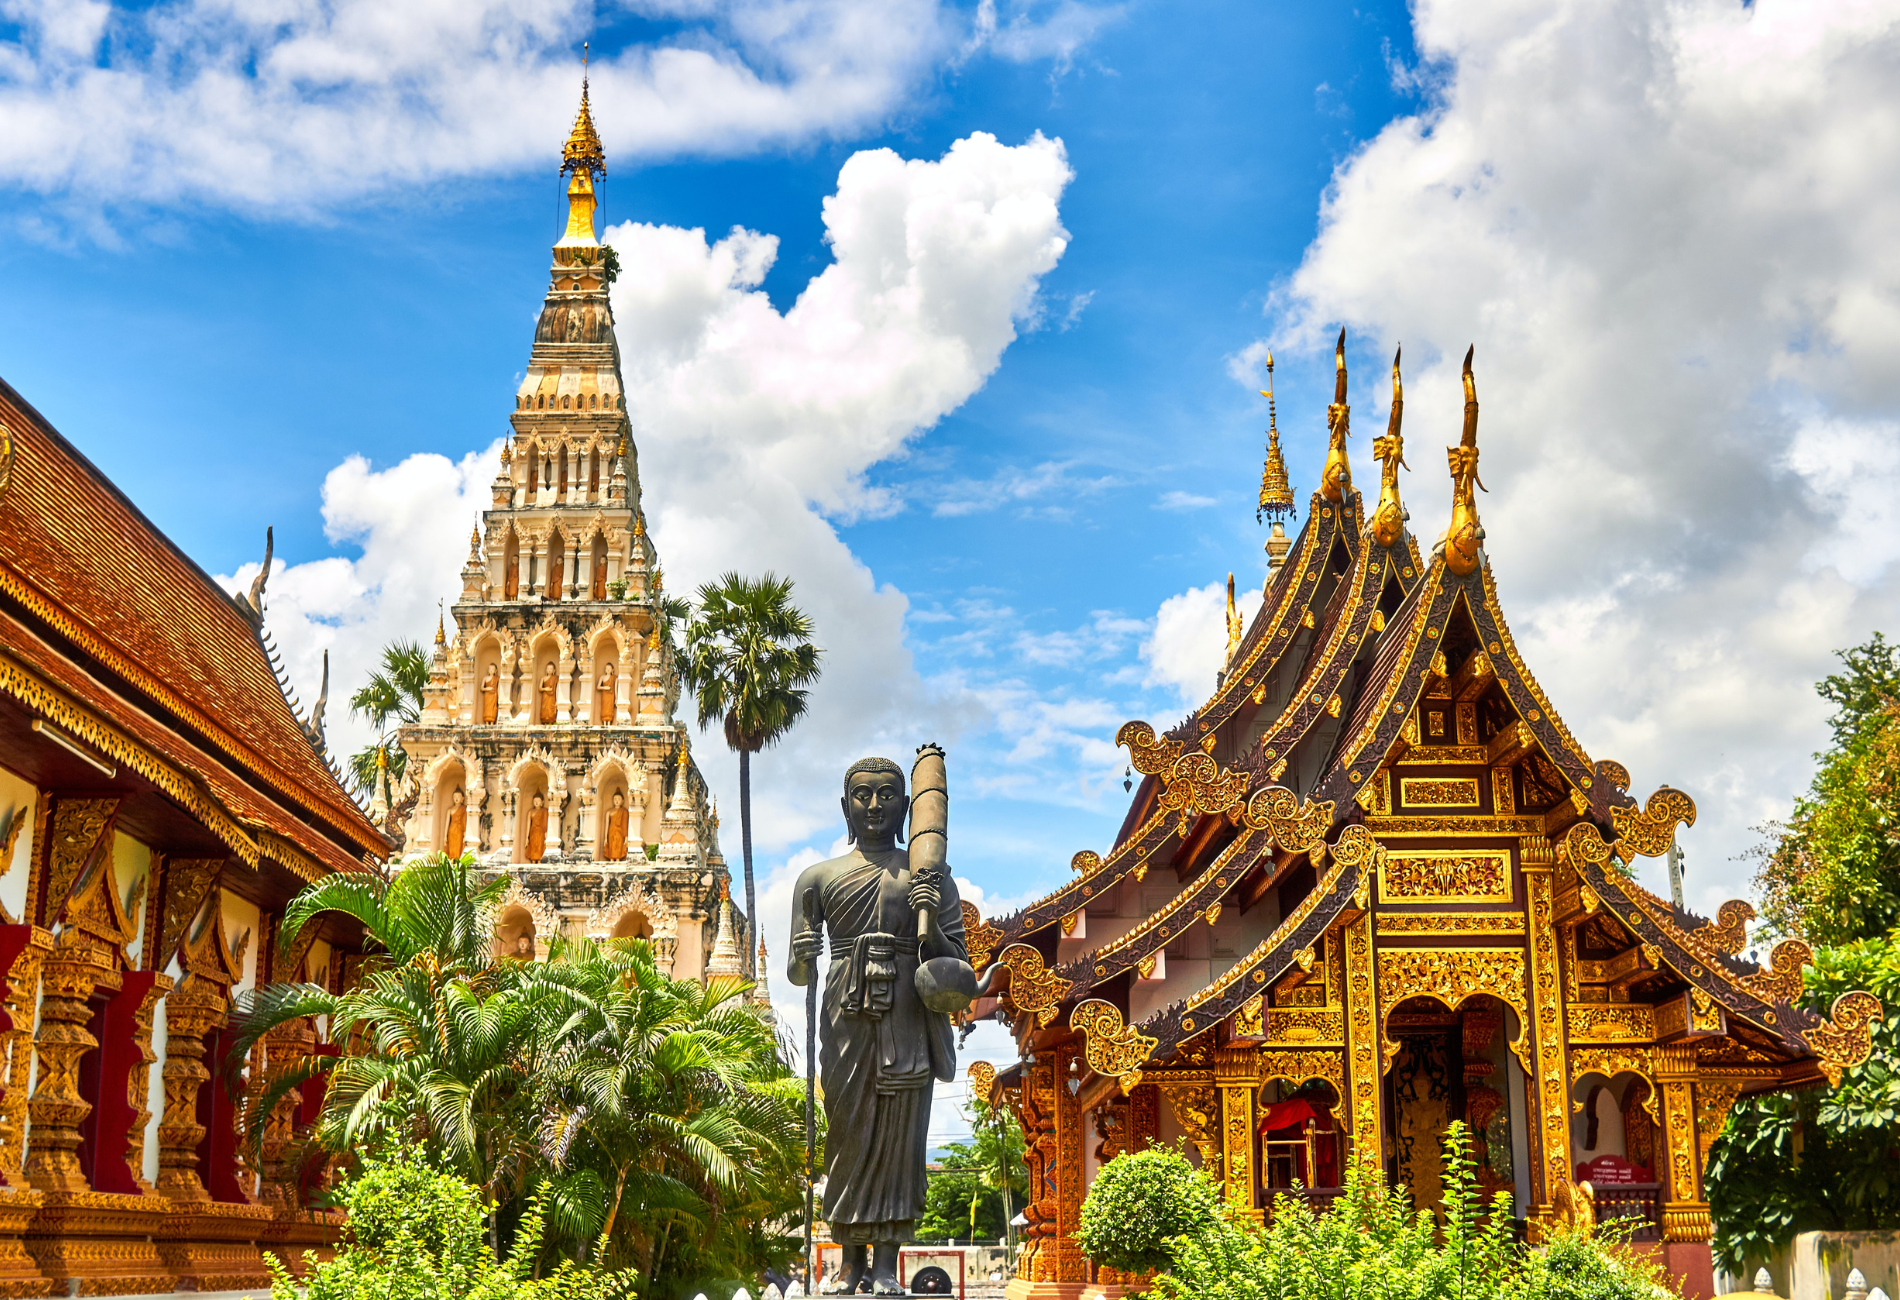 Thailand tourism tax